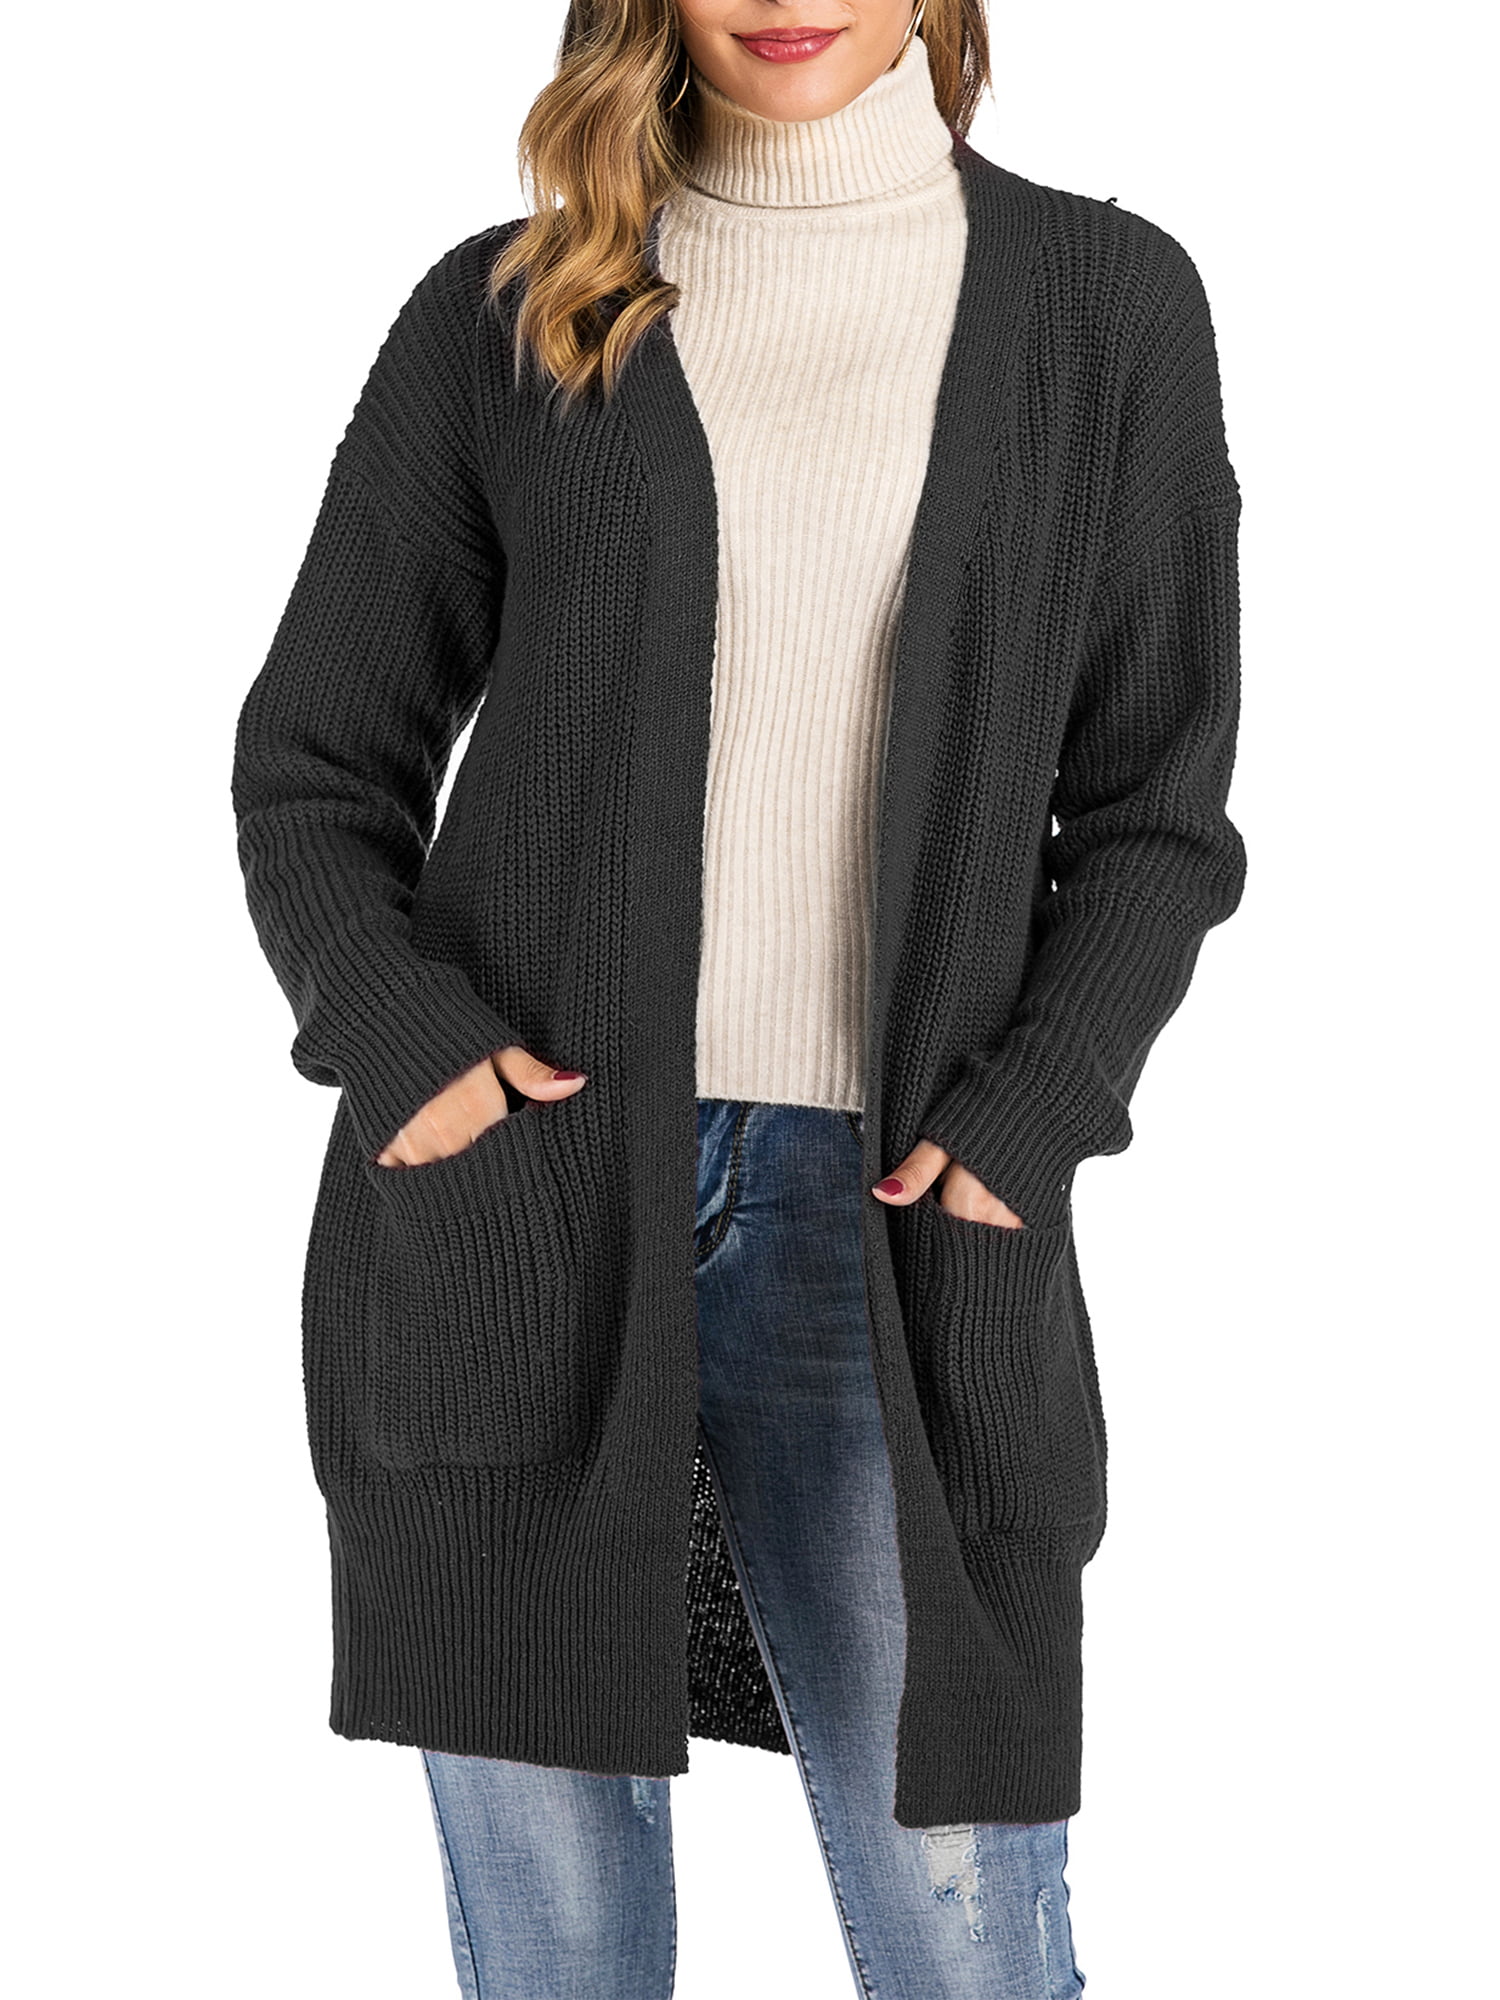 SAYFUT - Women's Open Front Duster Cardigan Long Sleeve Thin Sweater ...